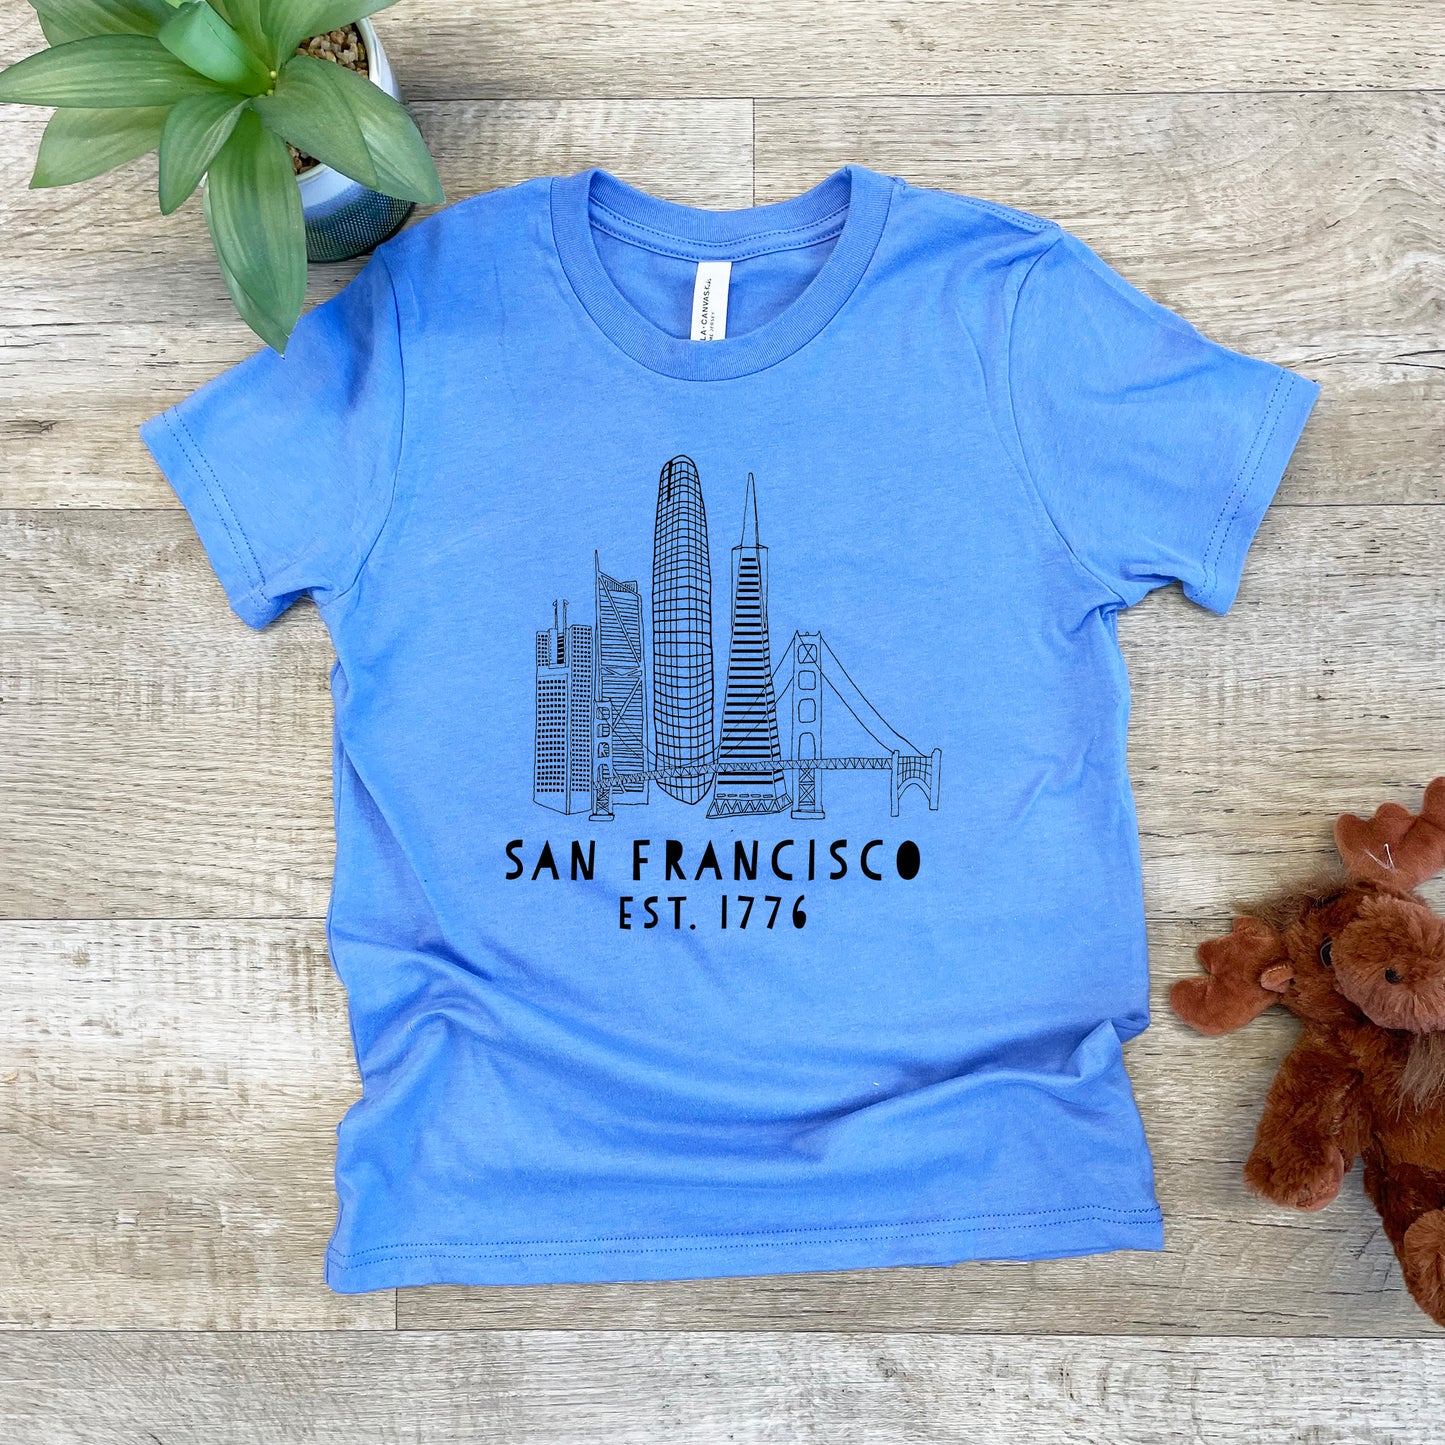 San Francisco Skyline - Kid's Tee - Columbia Blue or Lavender